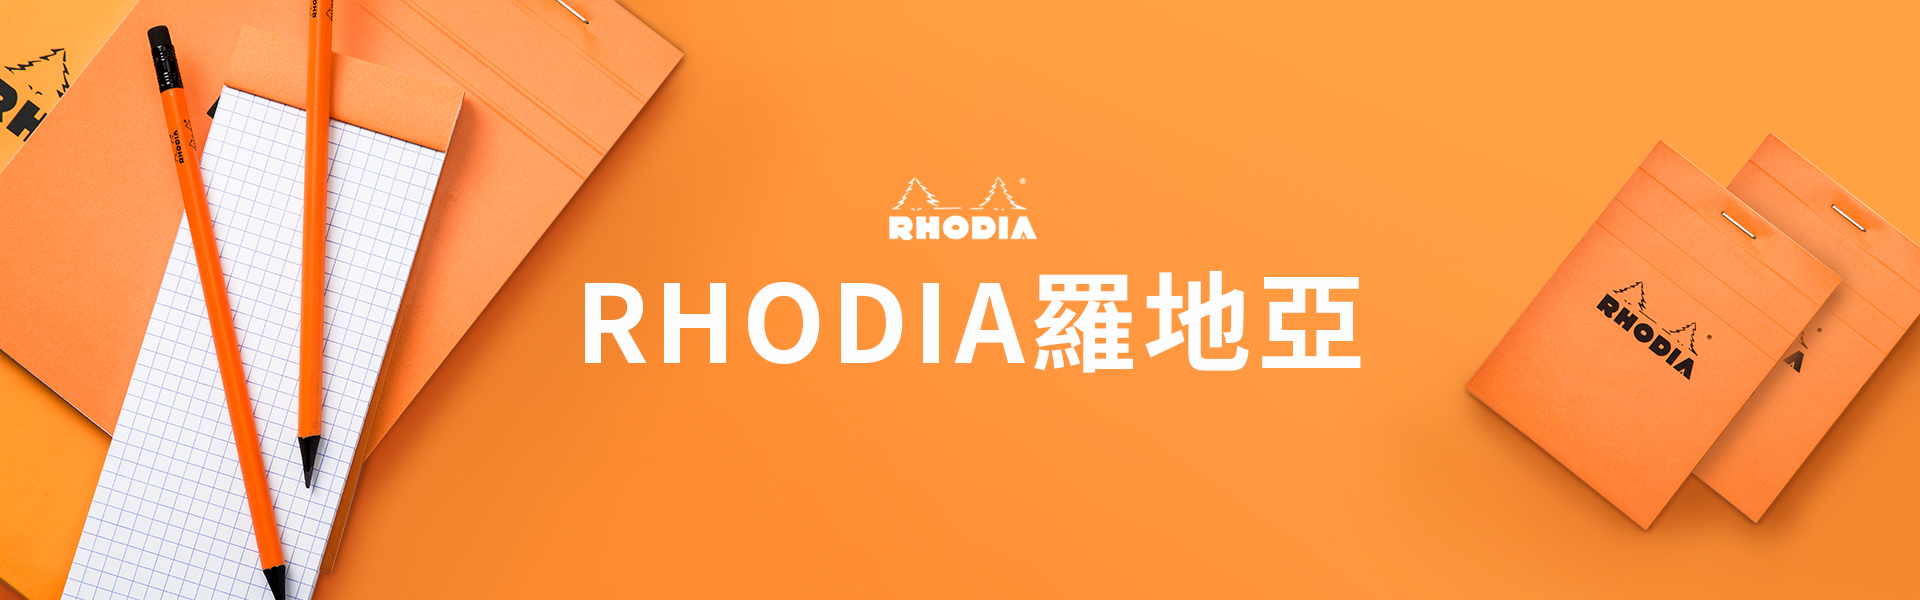 Rhodia香港 羅地亞 筆記本 Notepad 法國紙張品牌